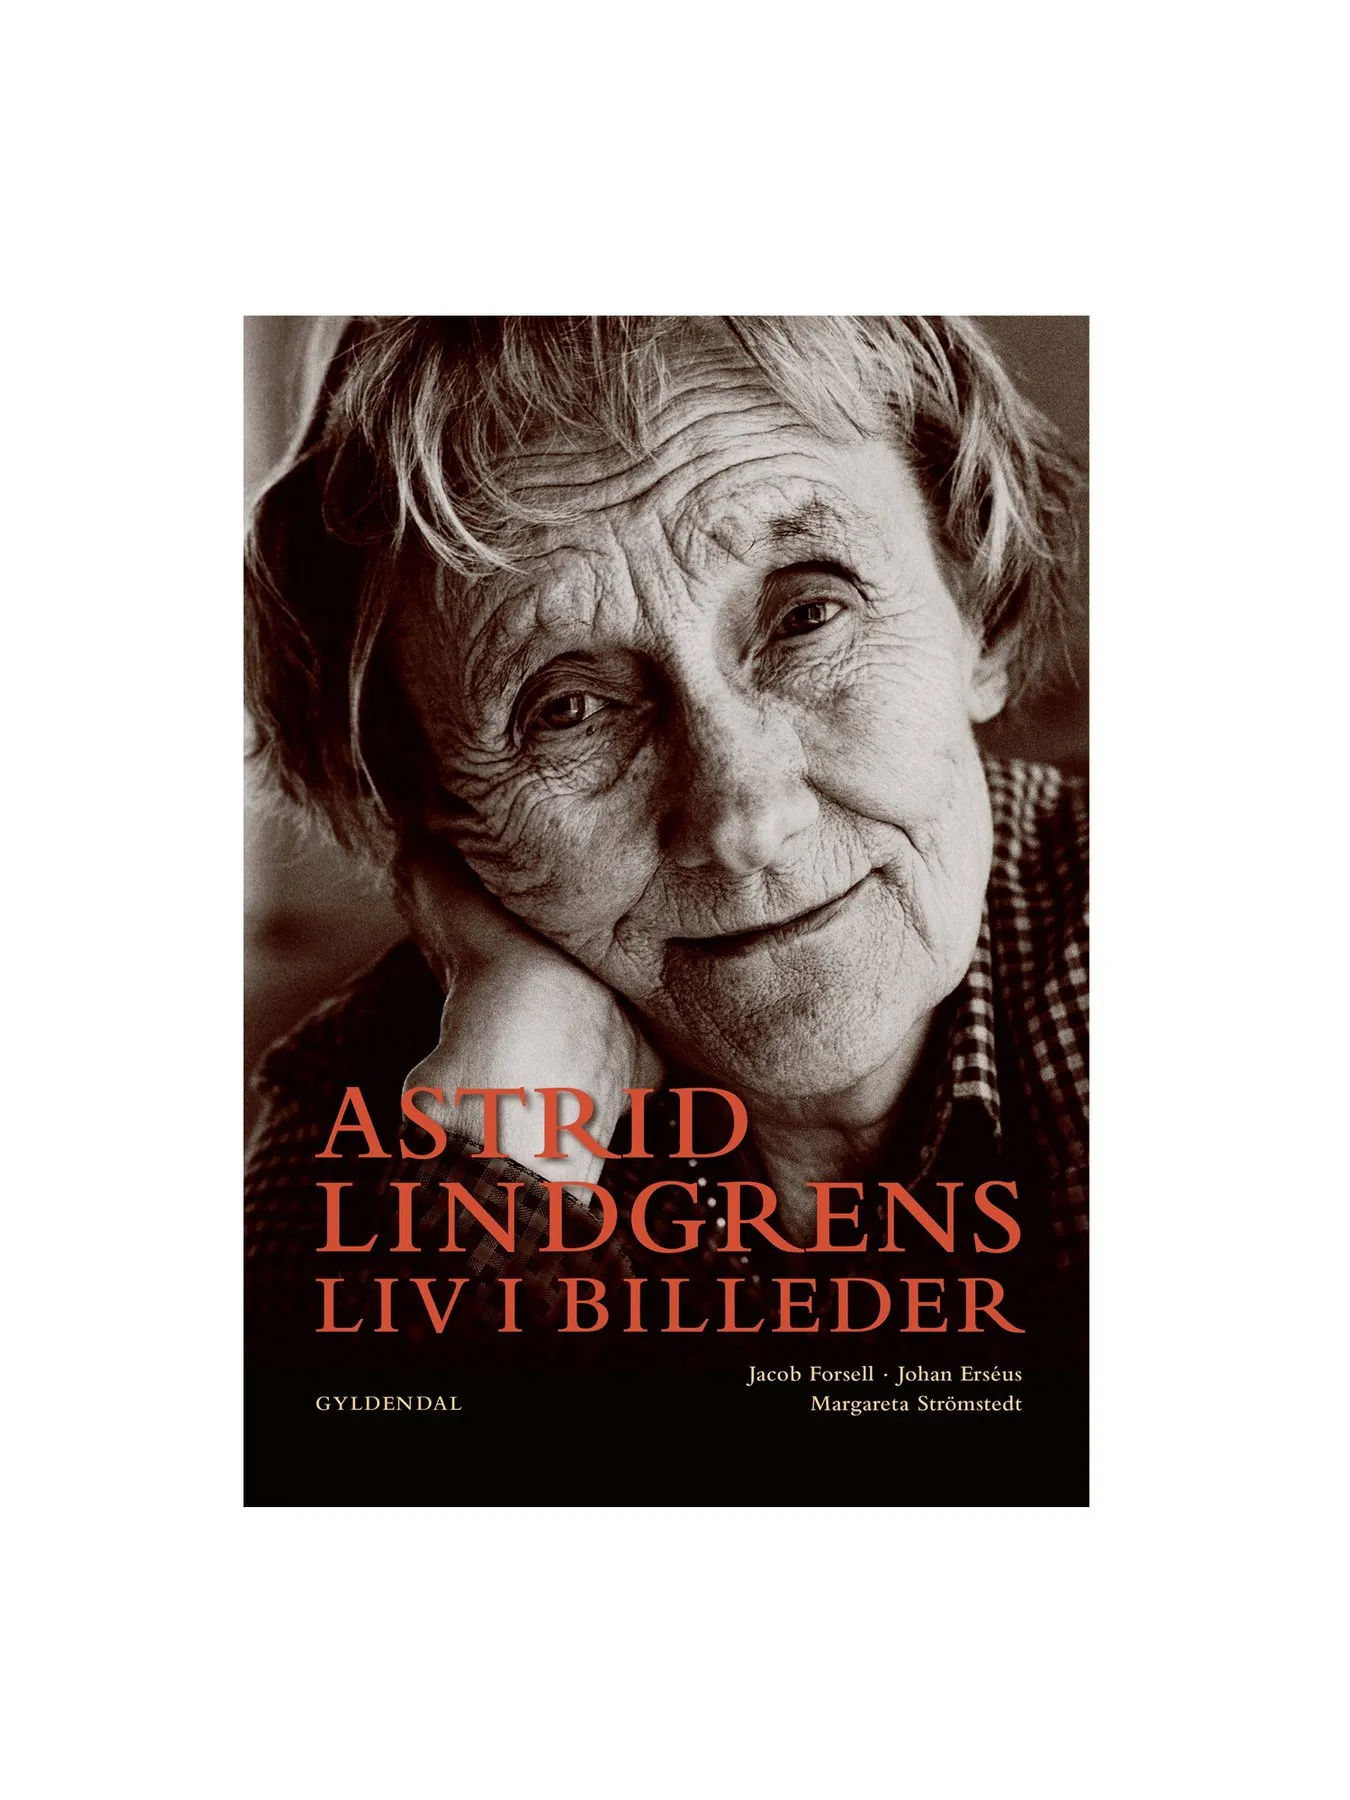 Astrid Lindgrens liv i billeder (Dänisch)